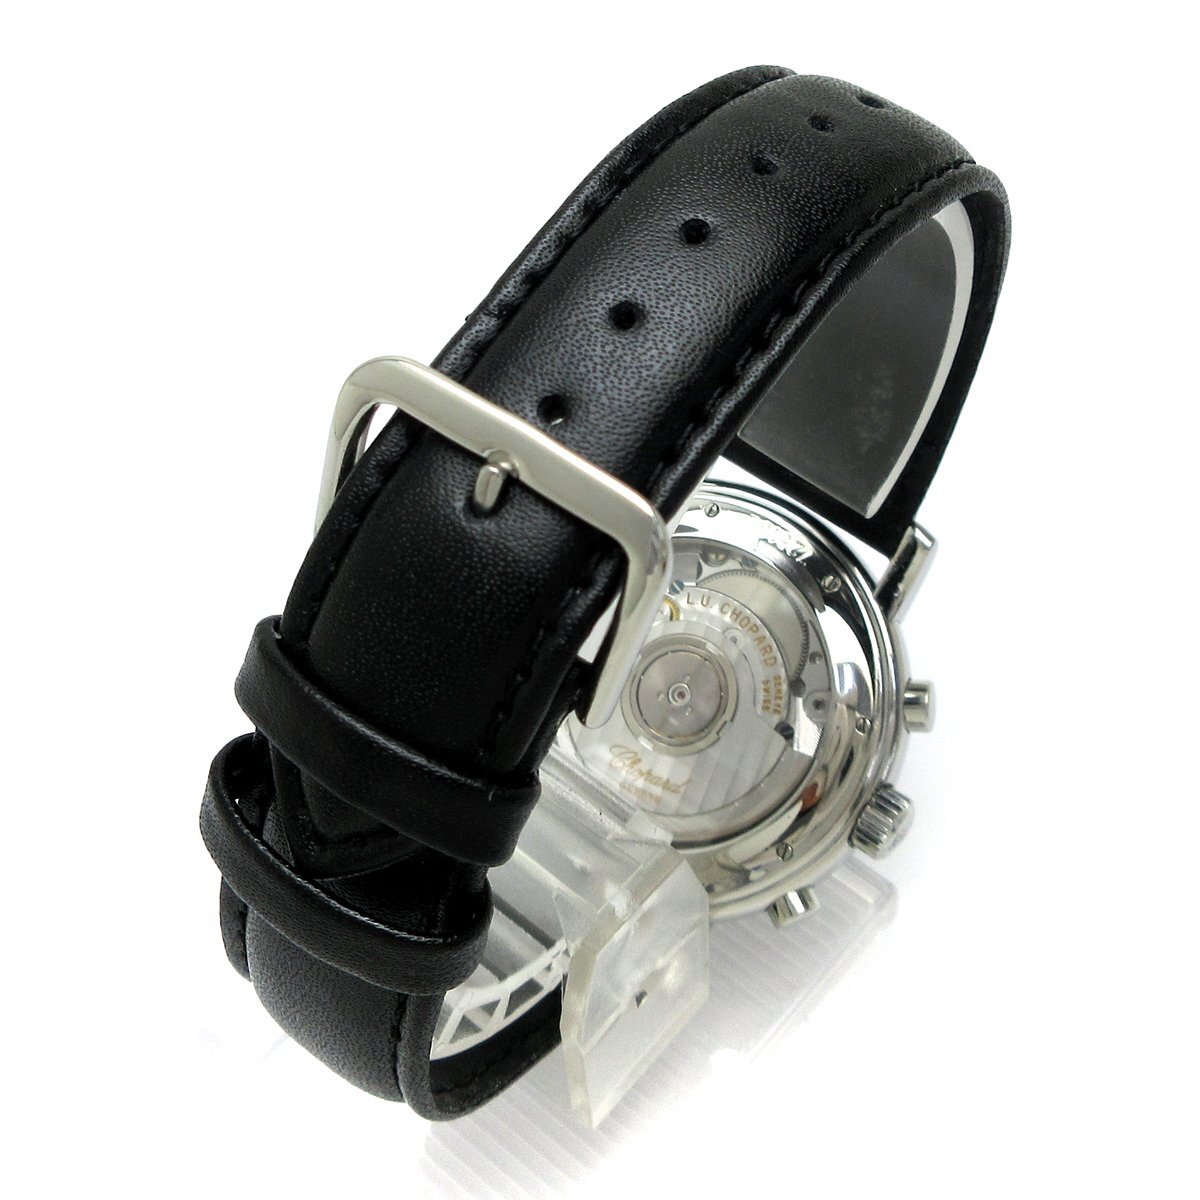 1 jpy Chopard miremi rear chronograph automatic men's black face 8331 clock Chopard self-winding watch rare 